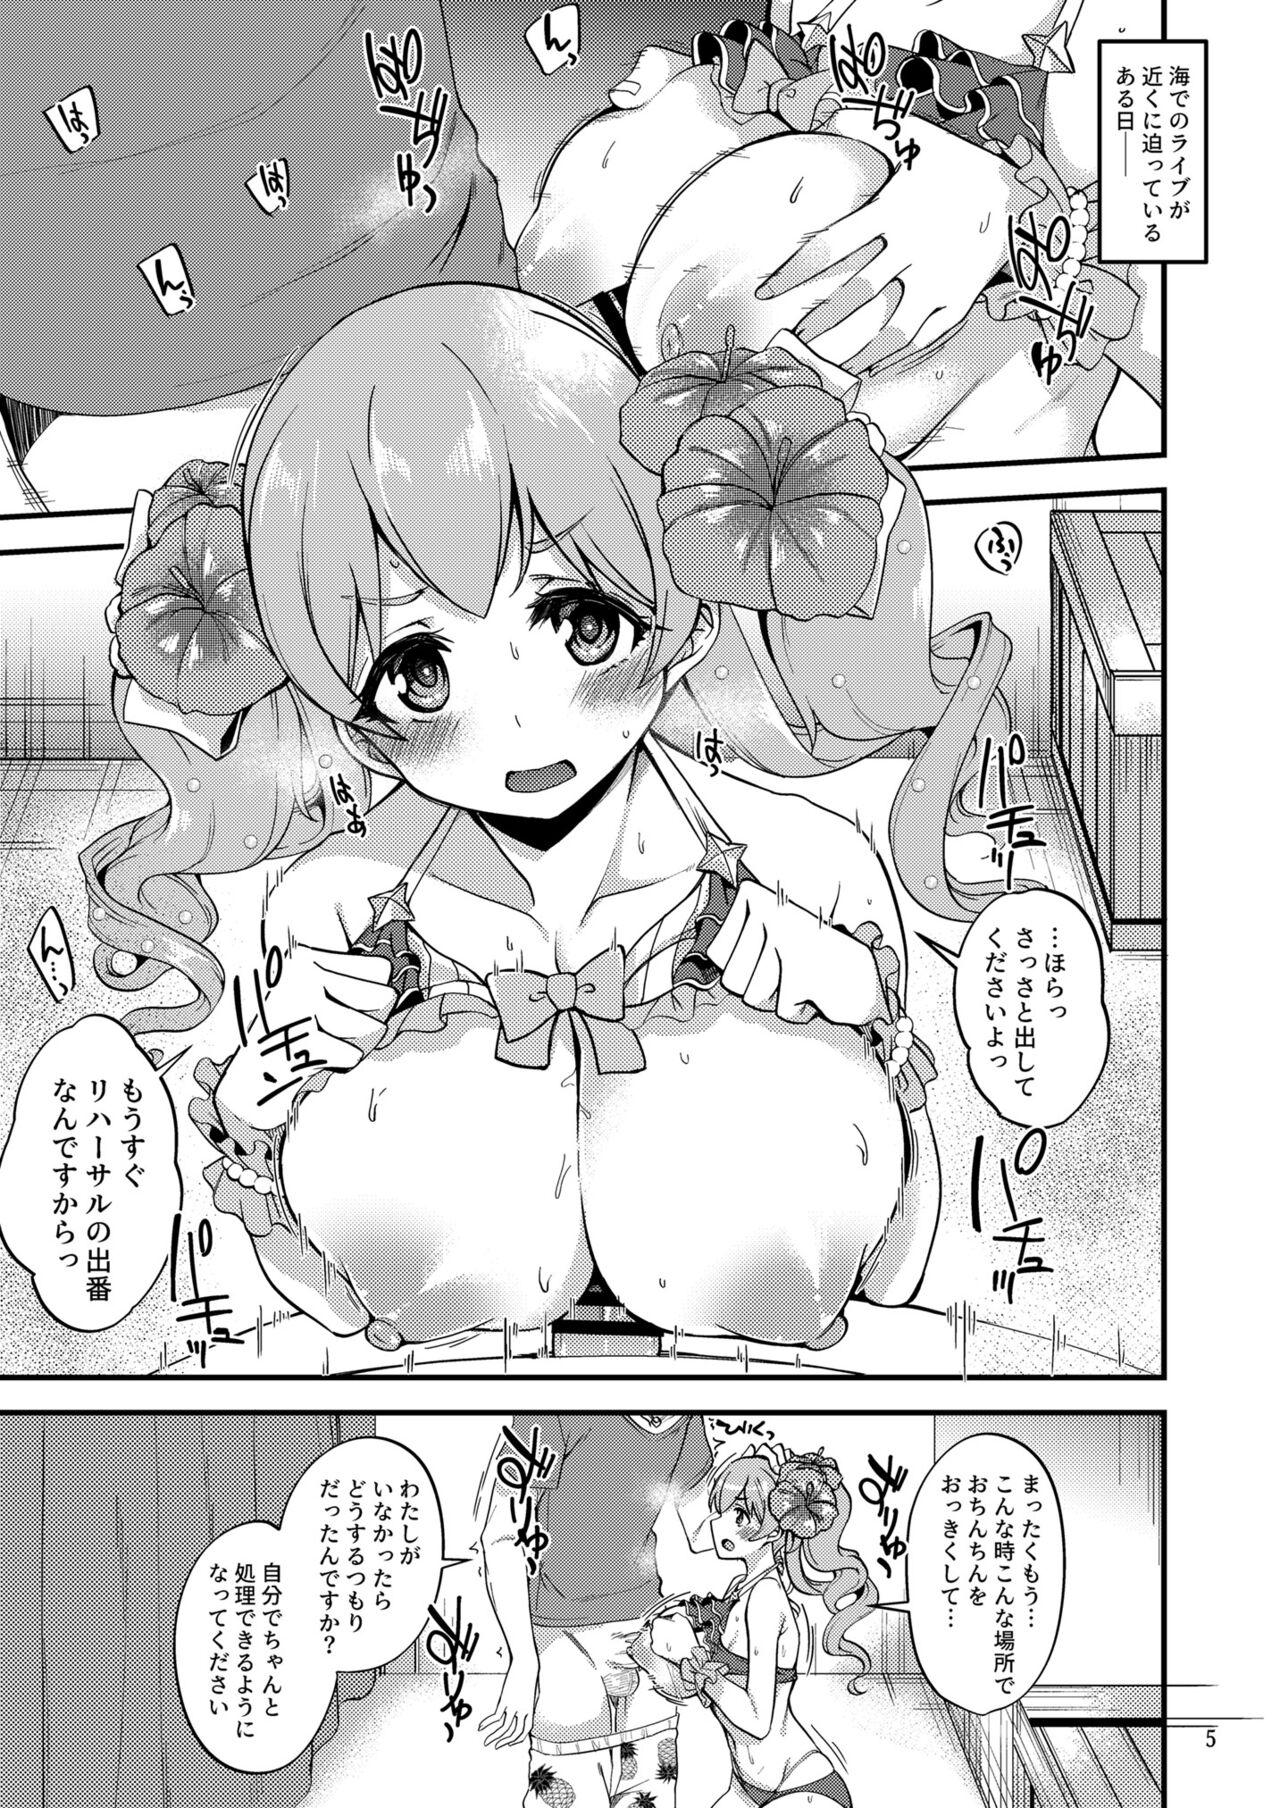 Sucks Tsumugi Make Heroine Move!! 07 - Princess connect Ebony - Page 4